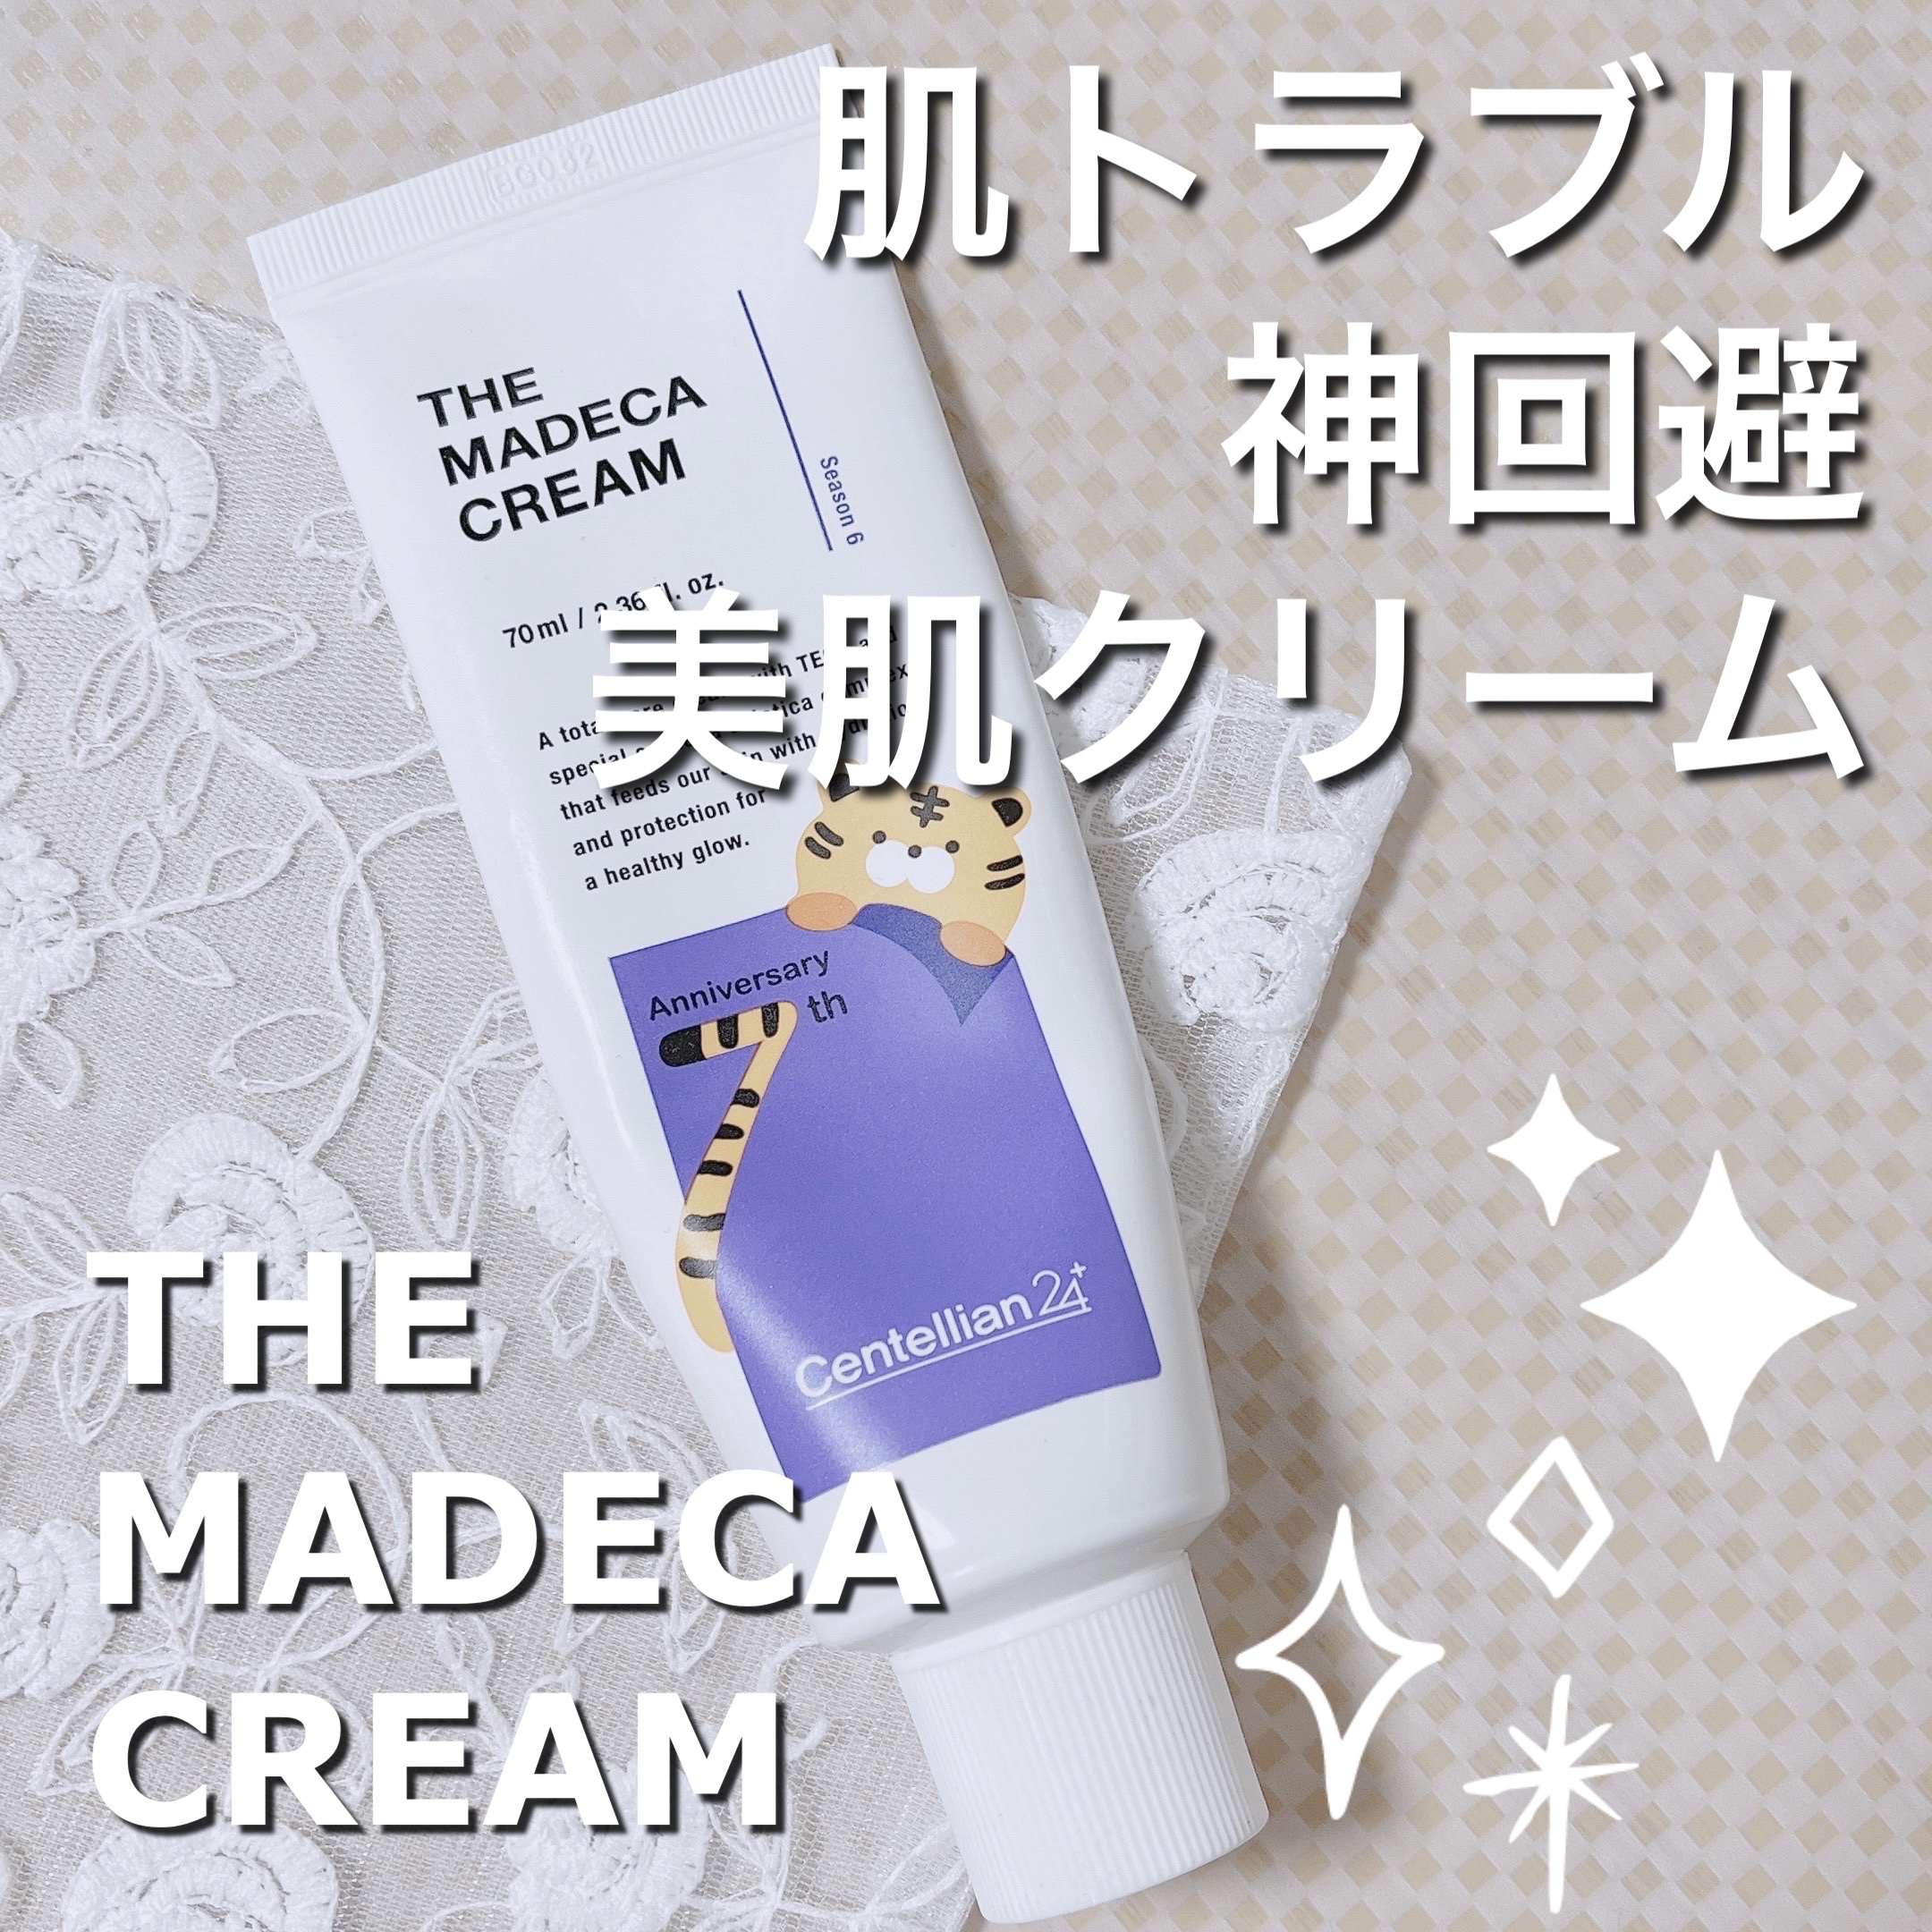 The medeca cream ザ マデカ クリーム - 基礎化粧品